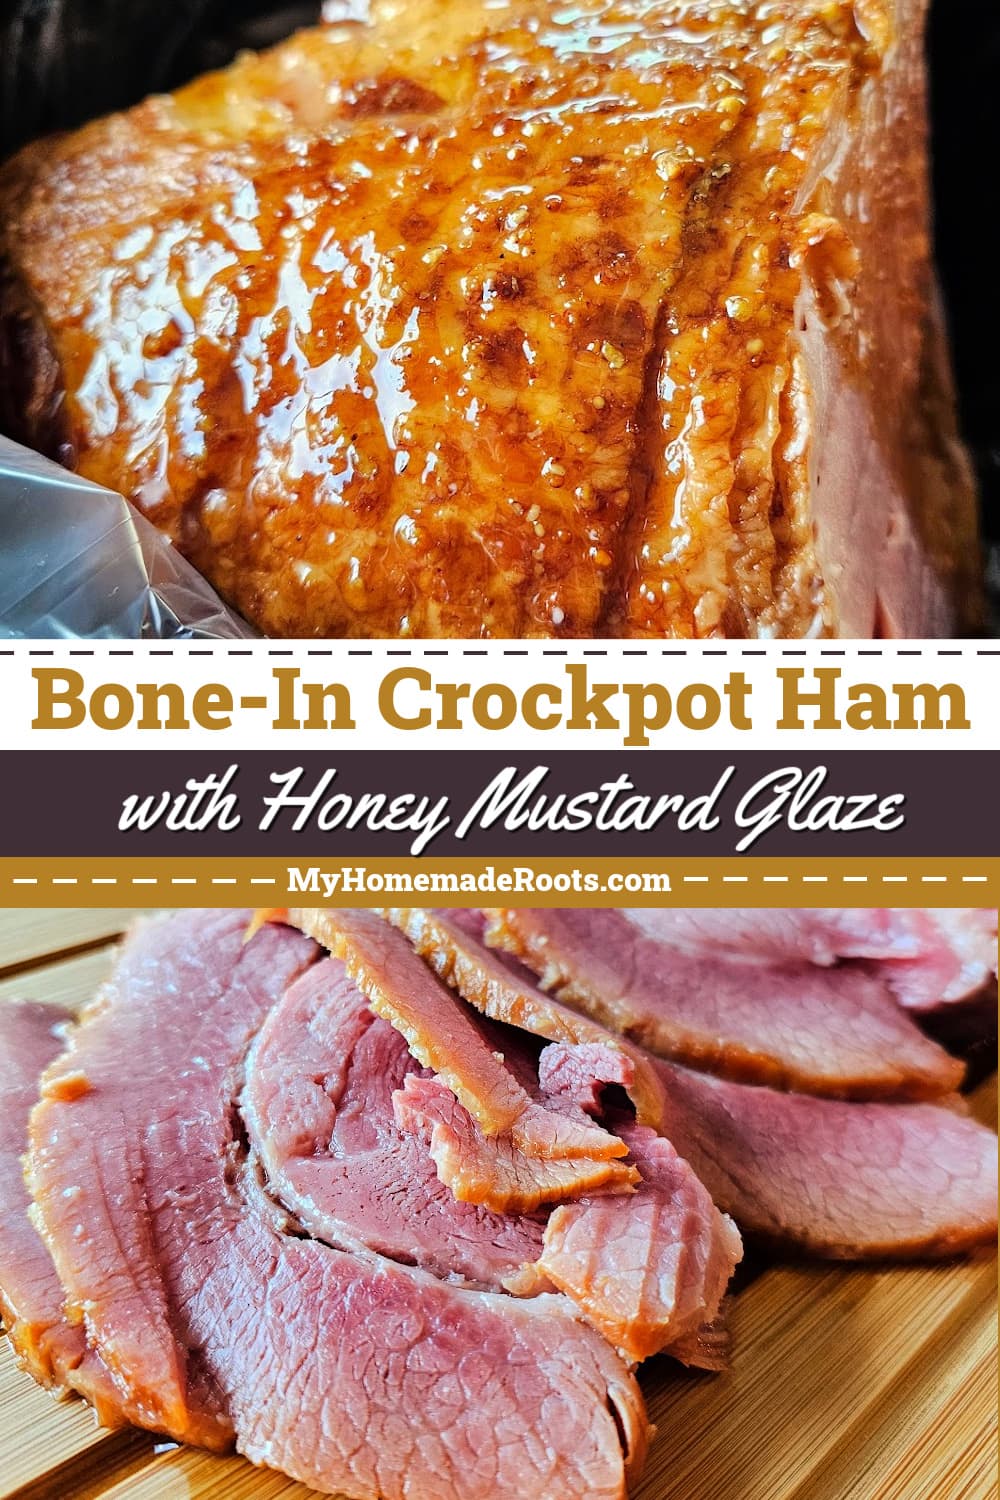 Bone-In Crockpot Ham with Honey Mustard Glaze